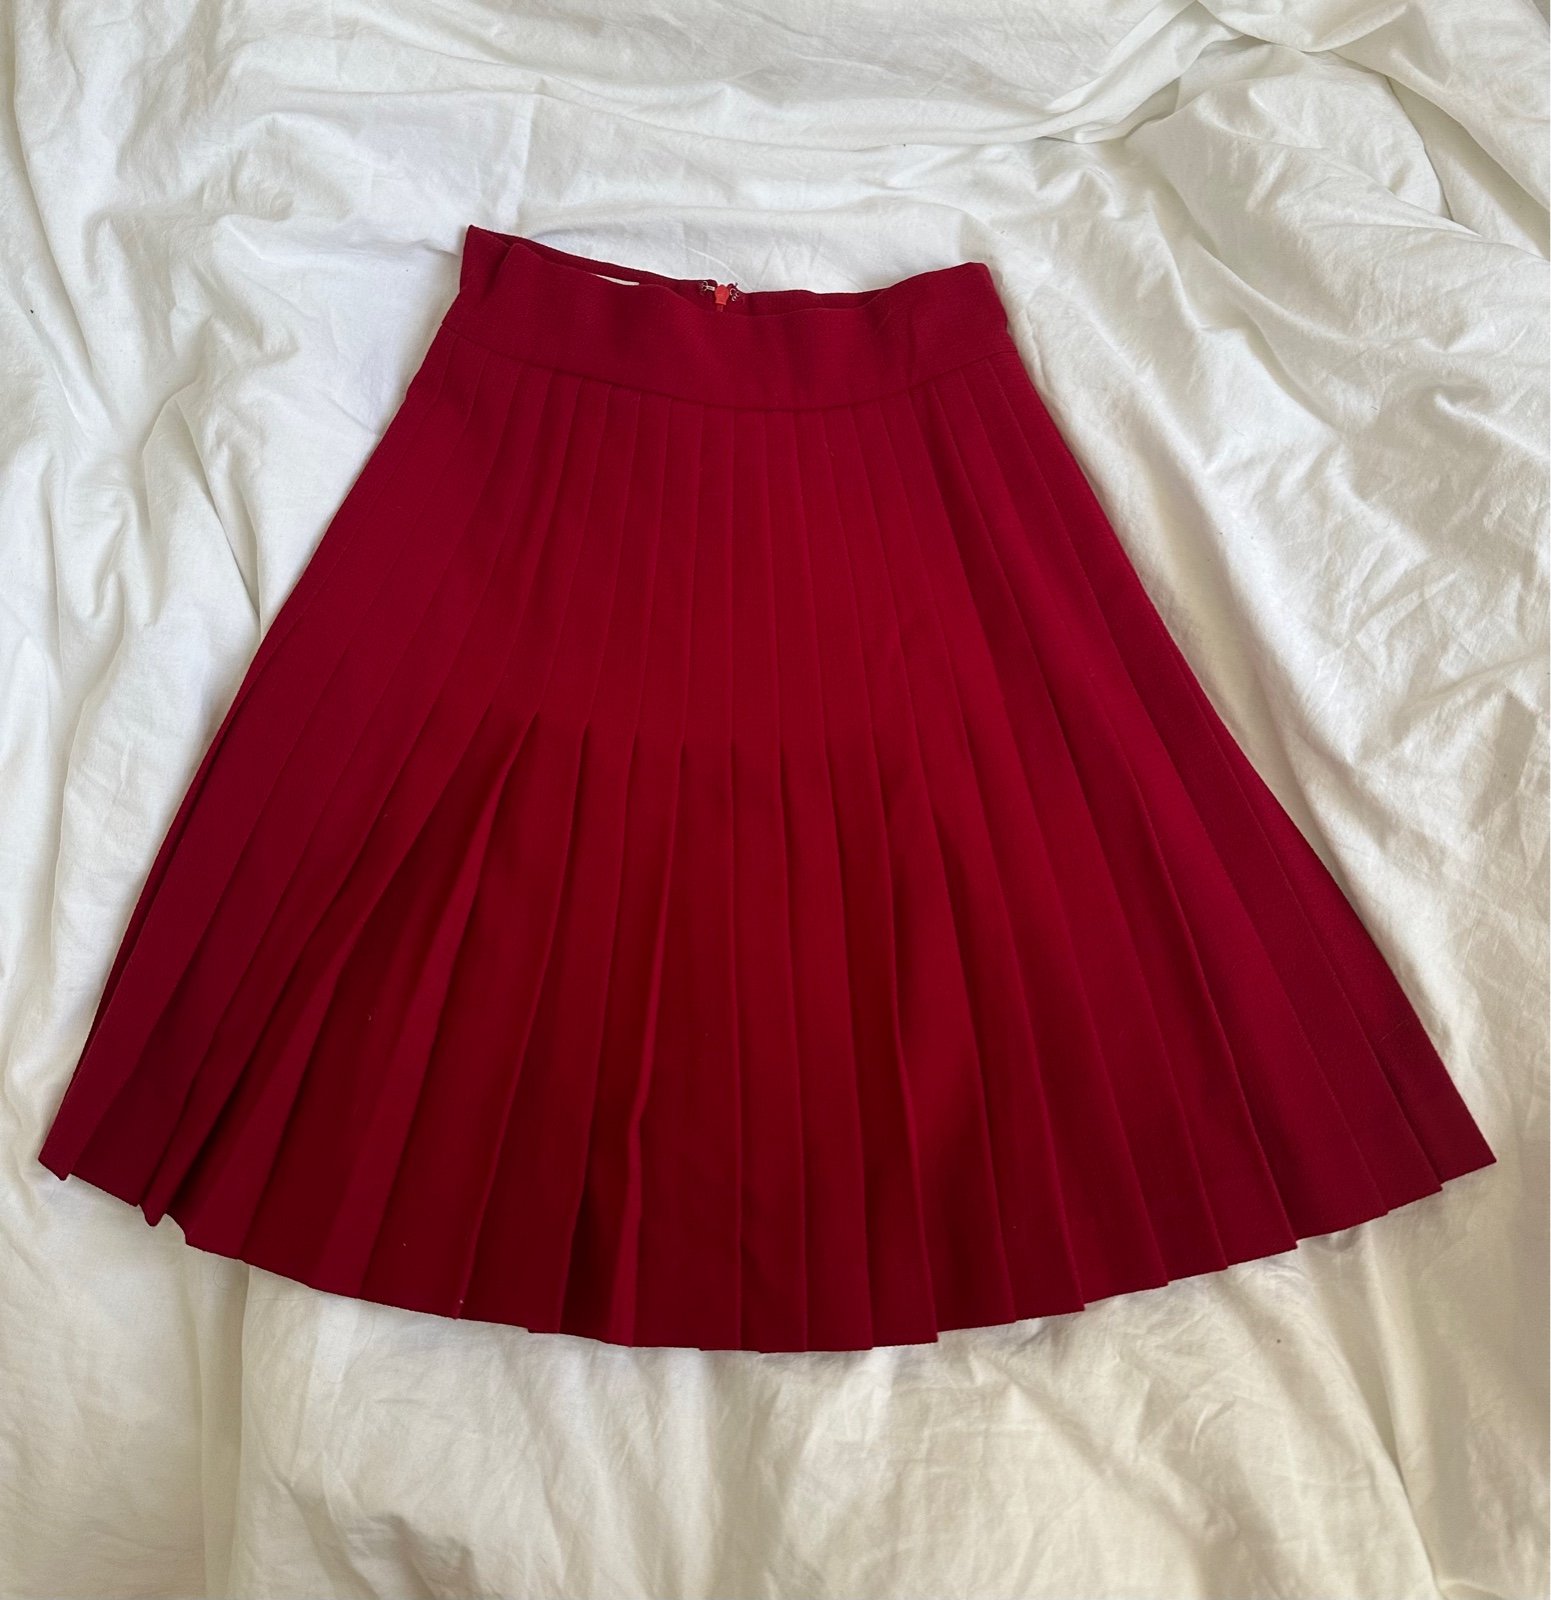 save up to 70% Red Midi Skirt k1GZwJ3lA outlet online shop